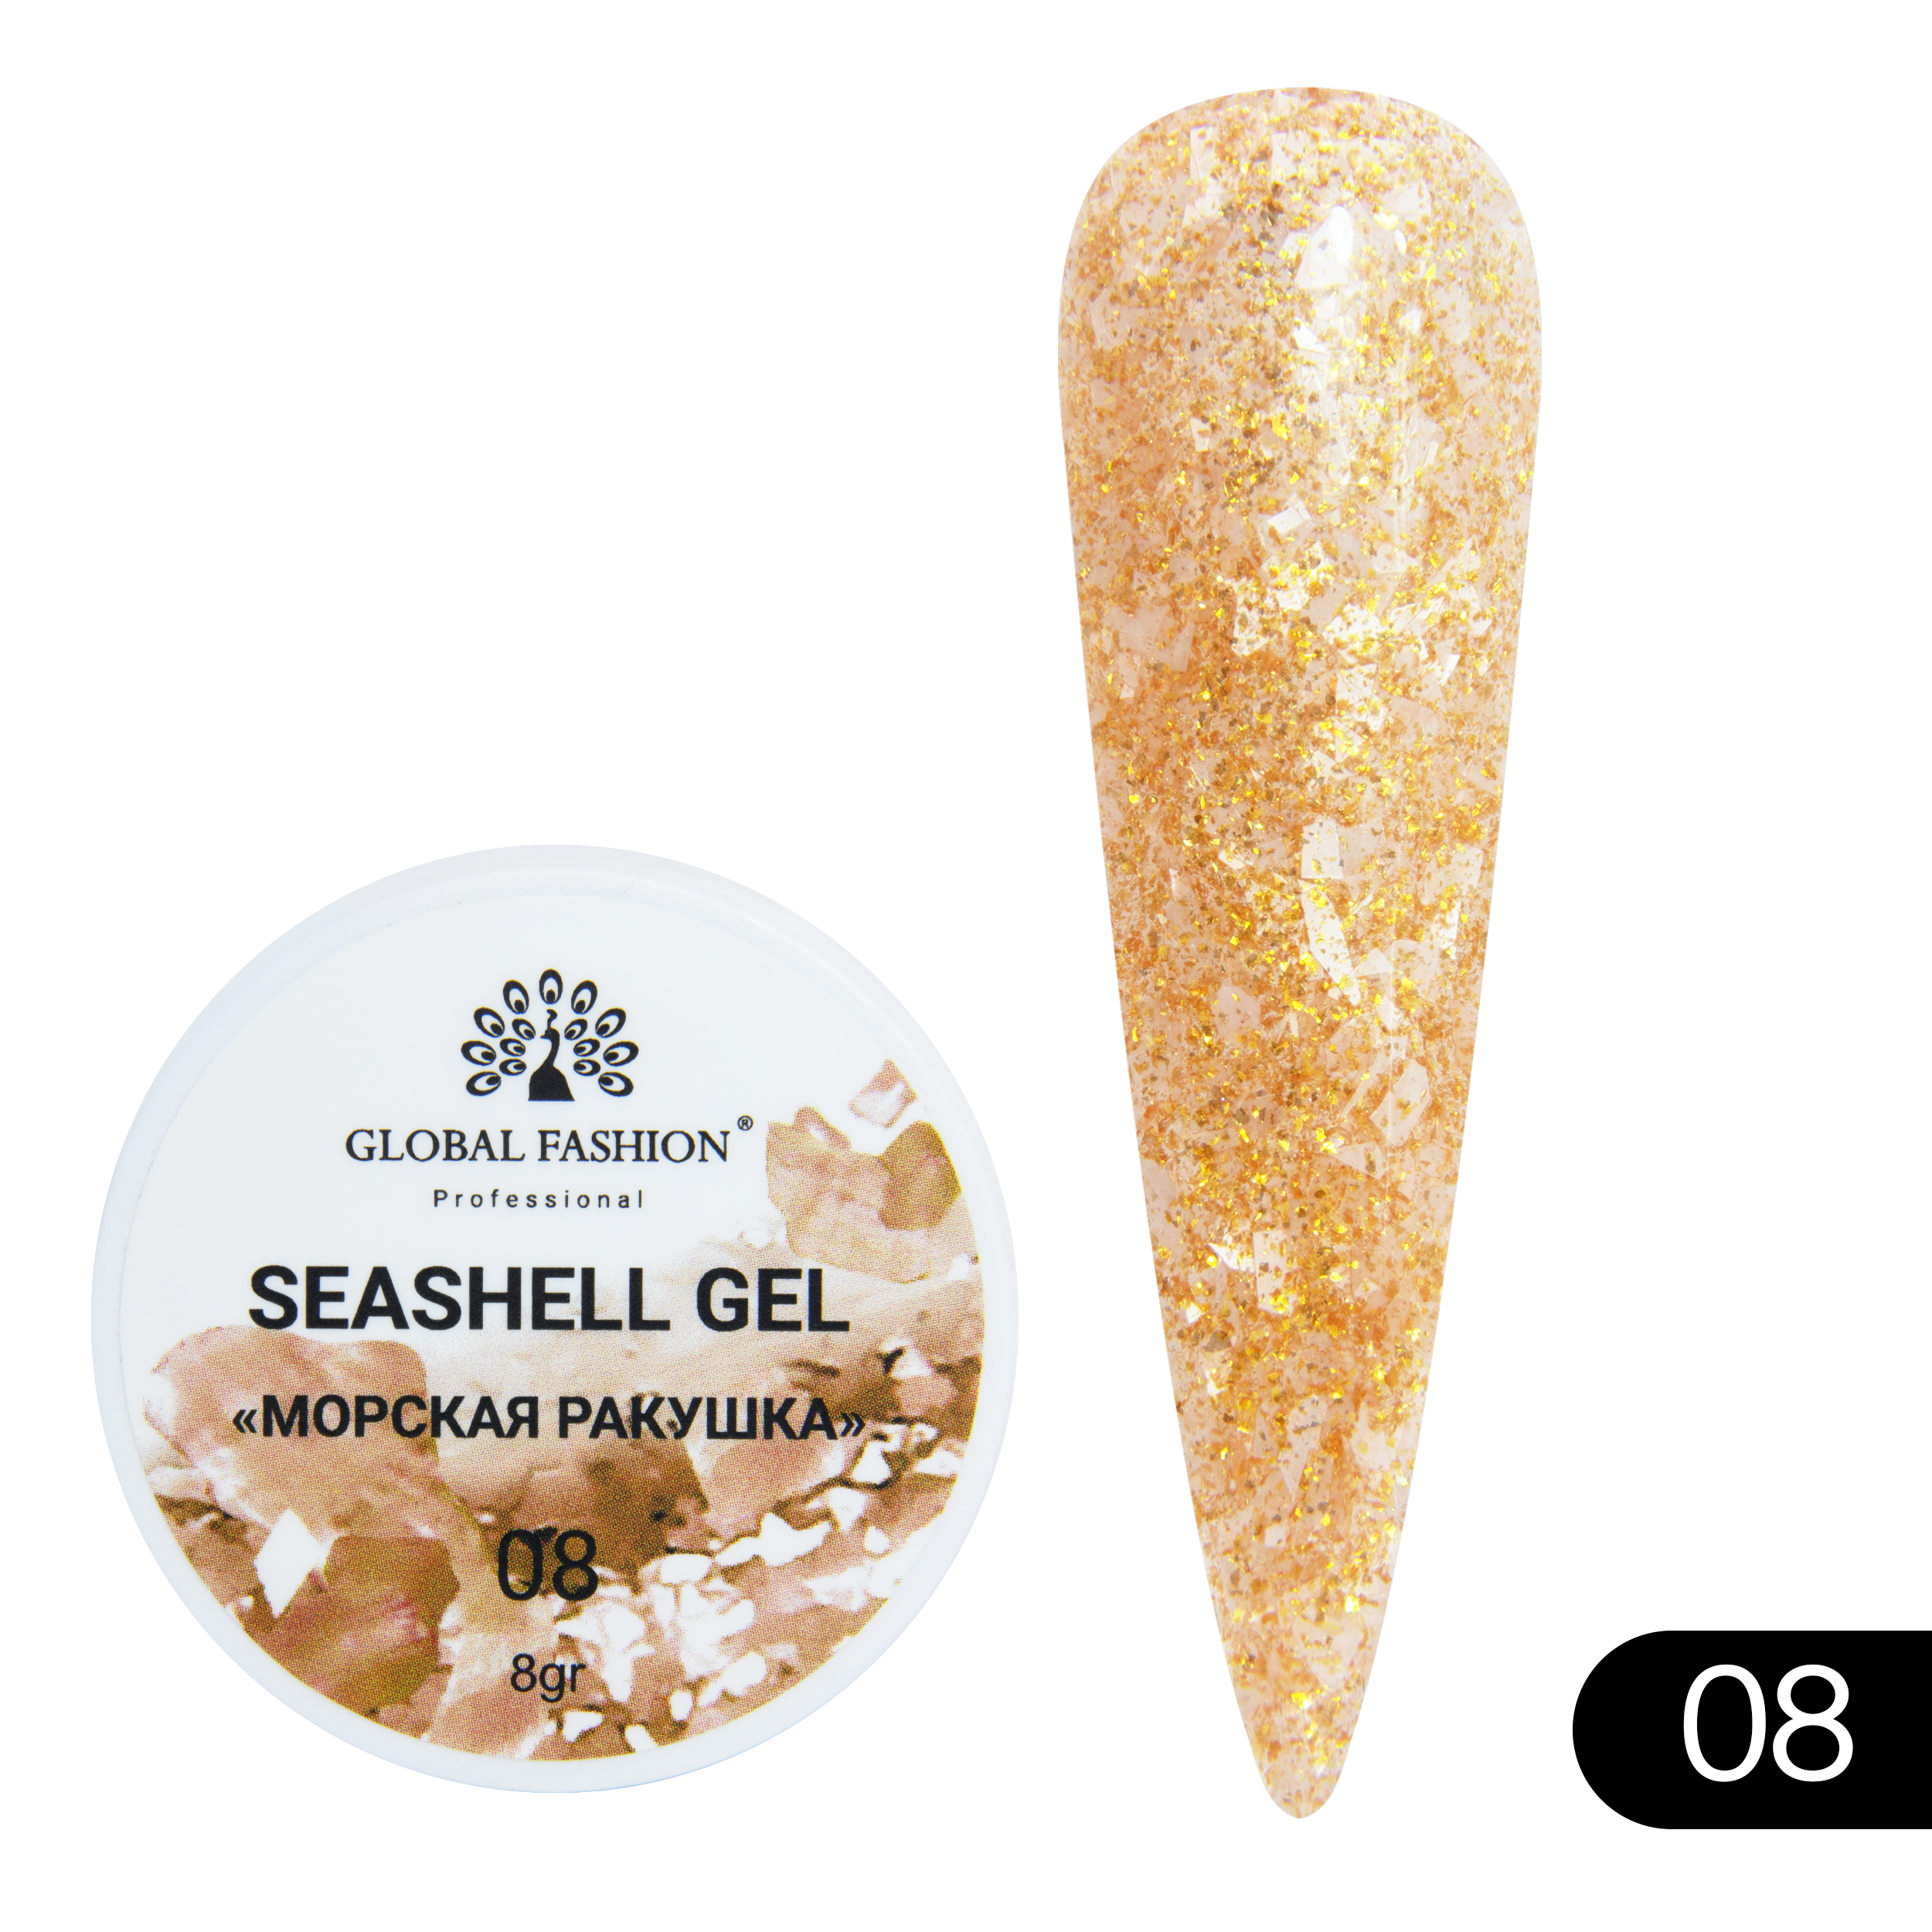 Гель-краска Global Fashion для ногтей с мраморным эффектом ракушки №08 Seashell Gel 5 г сачок для аквариумных рыб ferplast 50